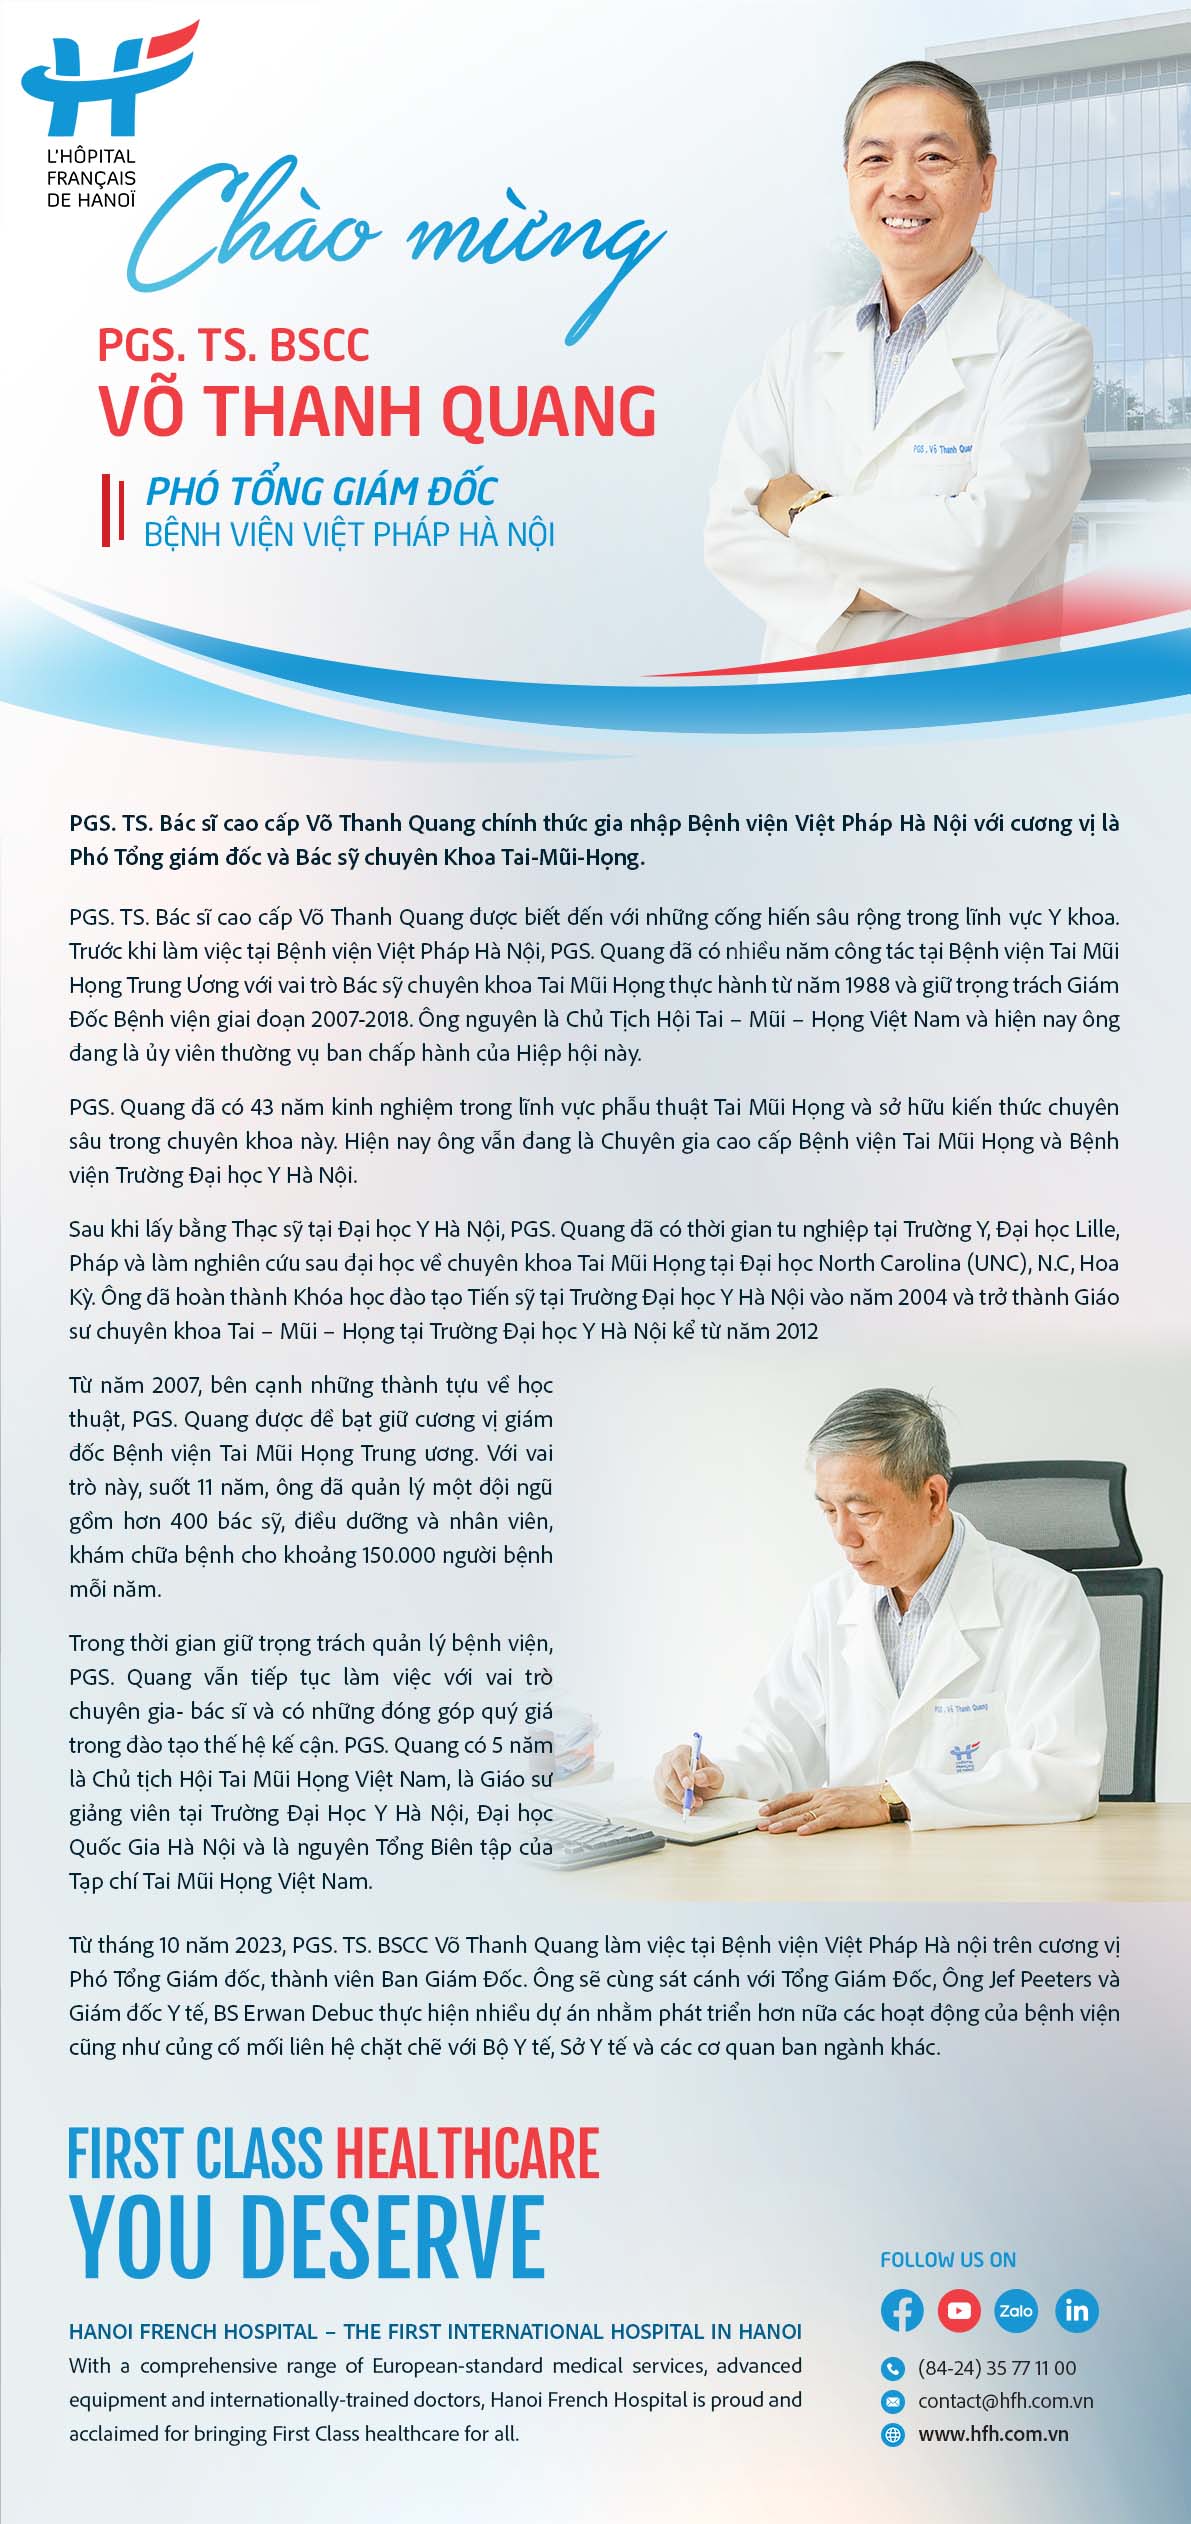 Dr. Quang